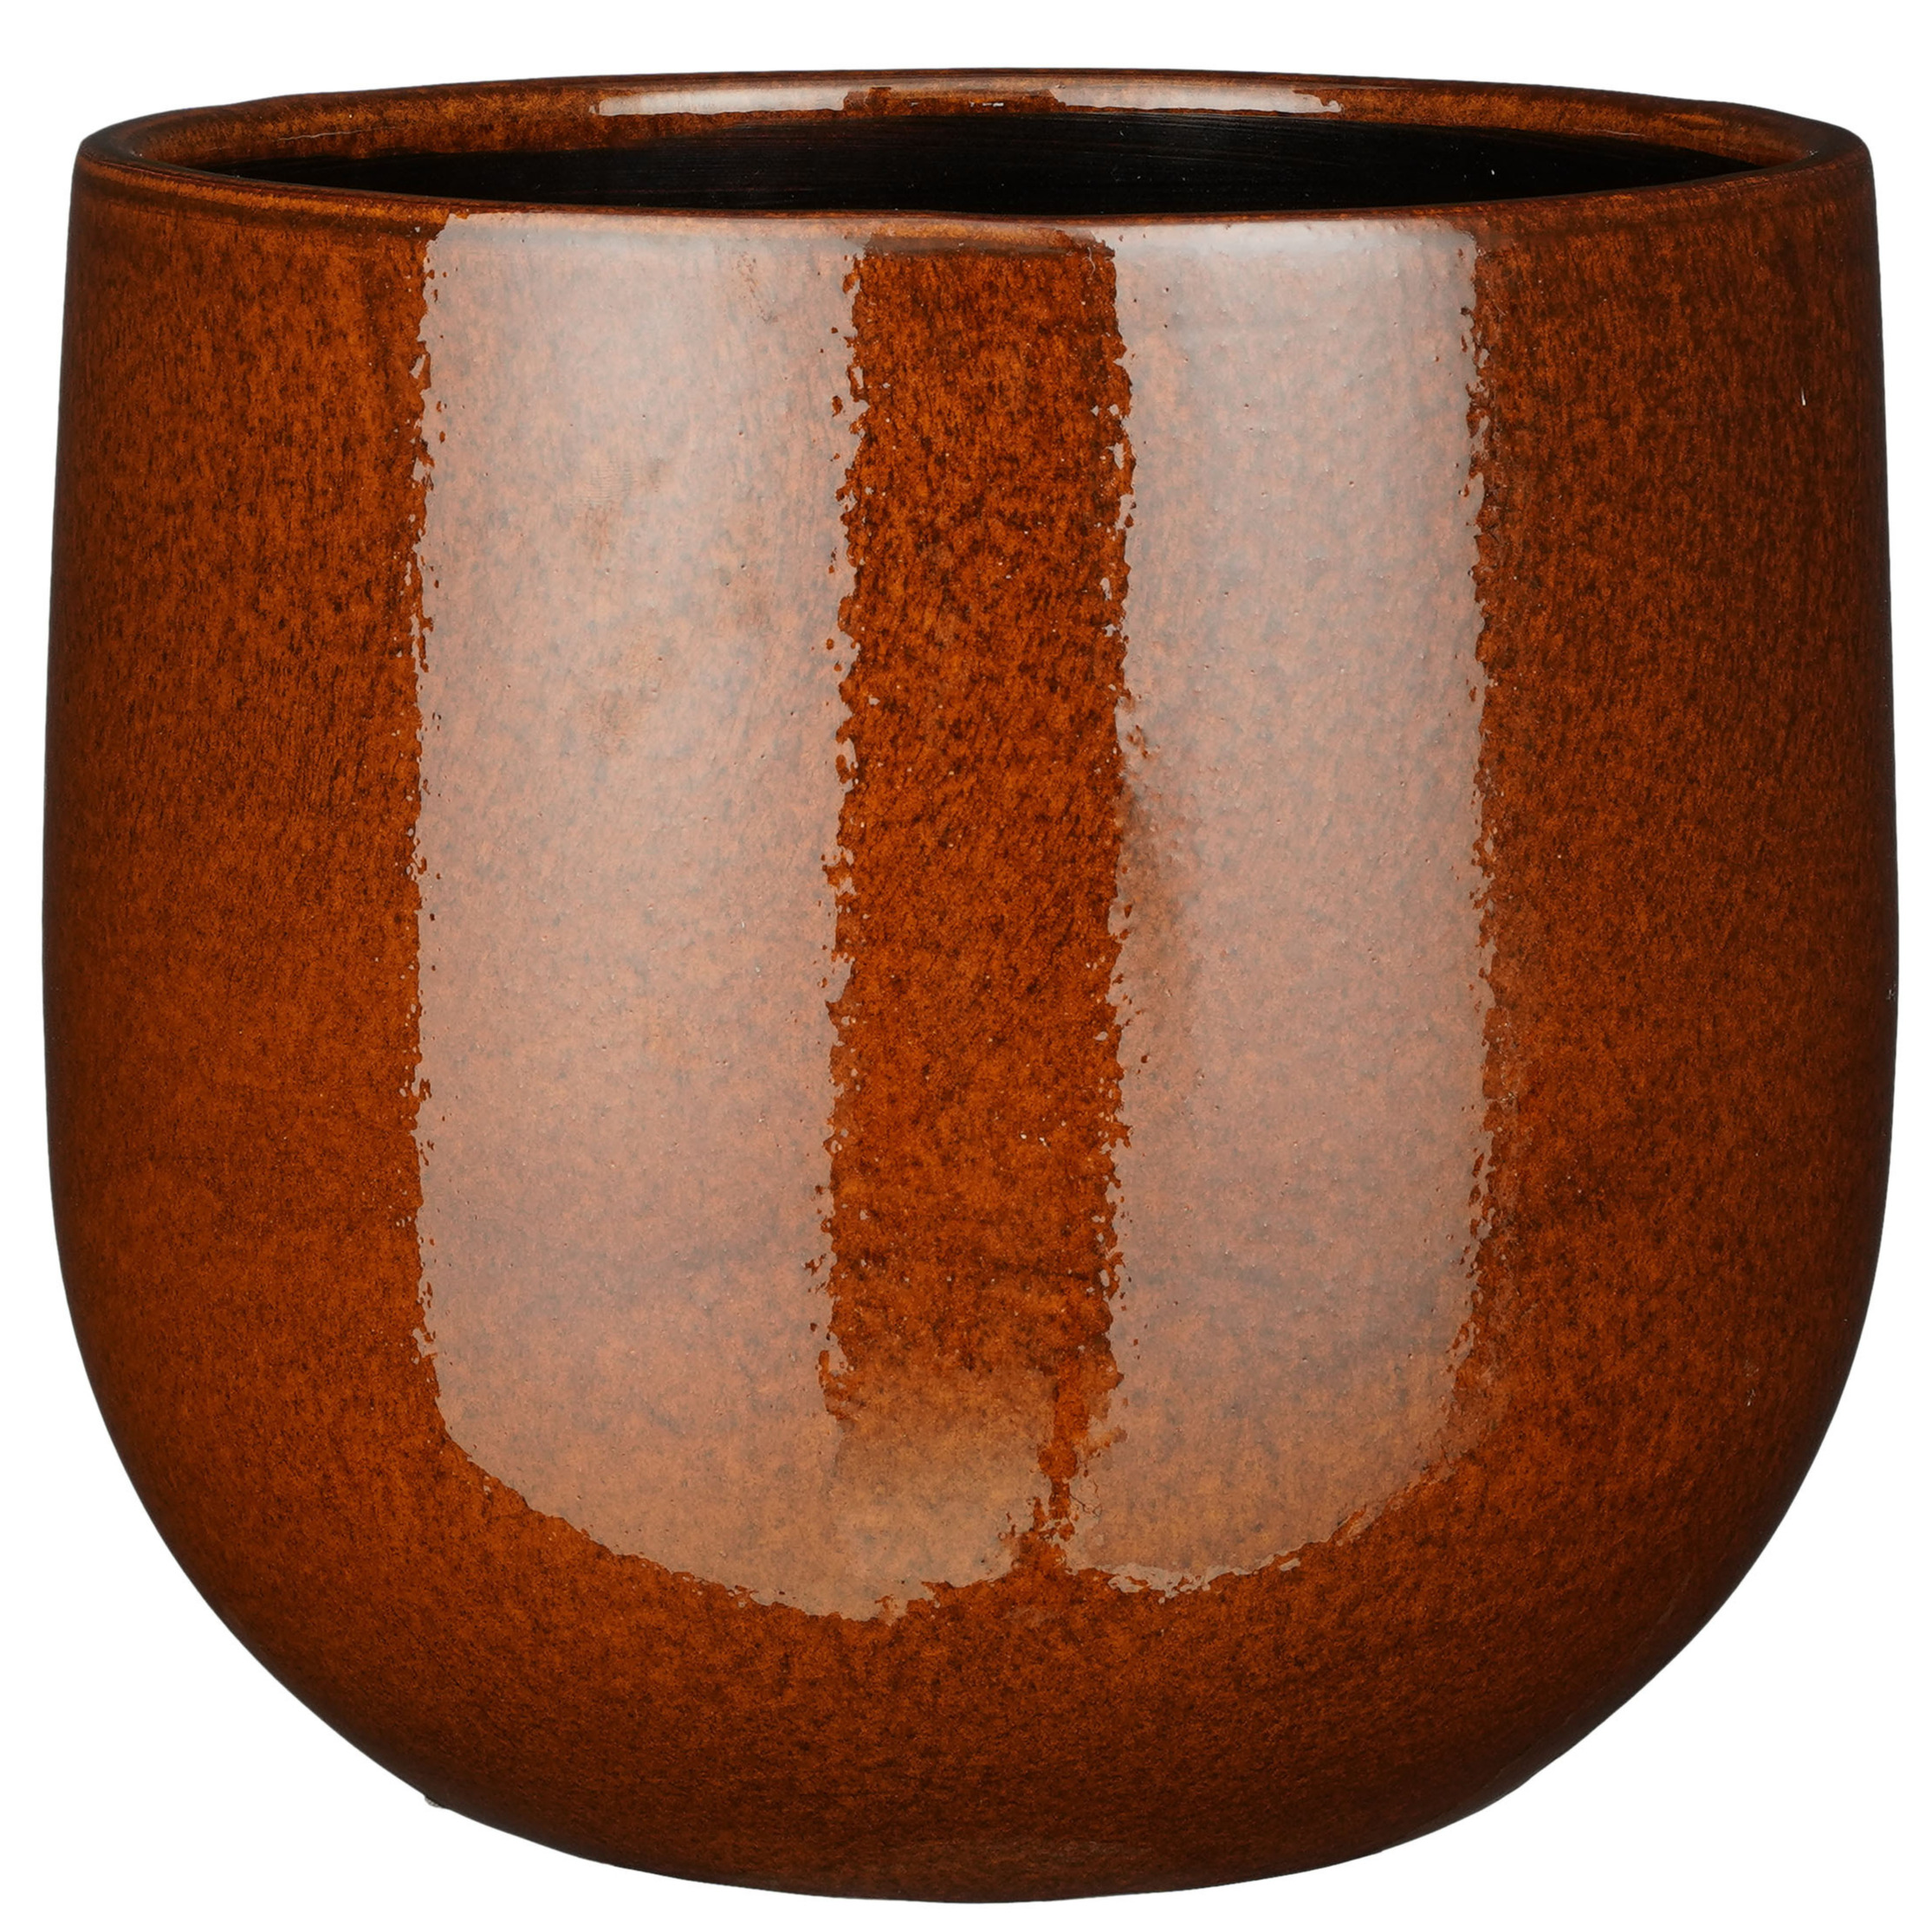 Plantenpot-bloempot keramiek terra bruin speels licht gevlekt patroon D29-H25 cm